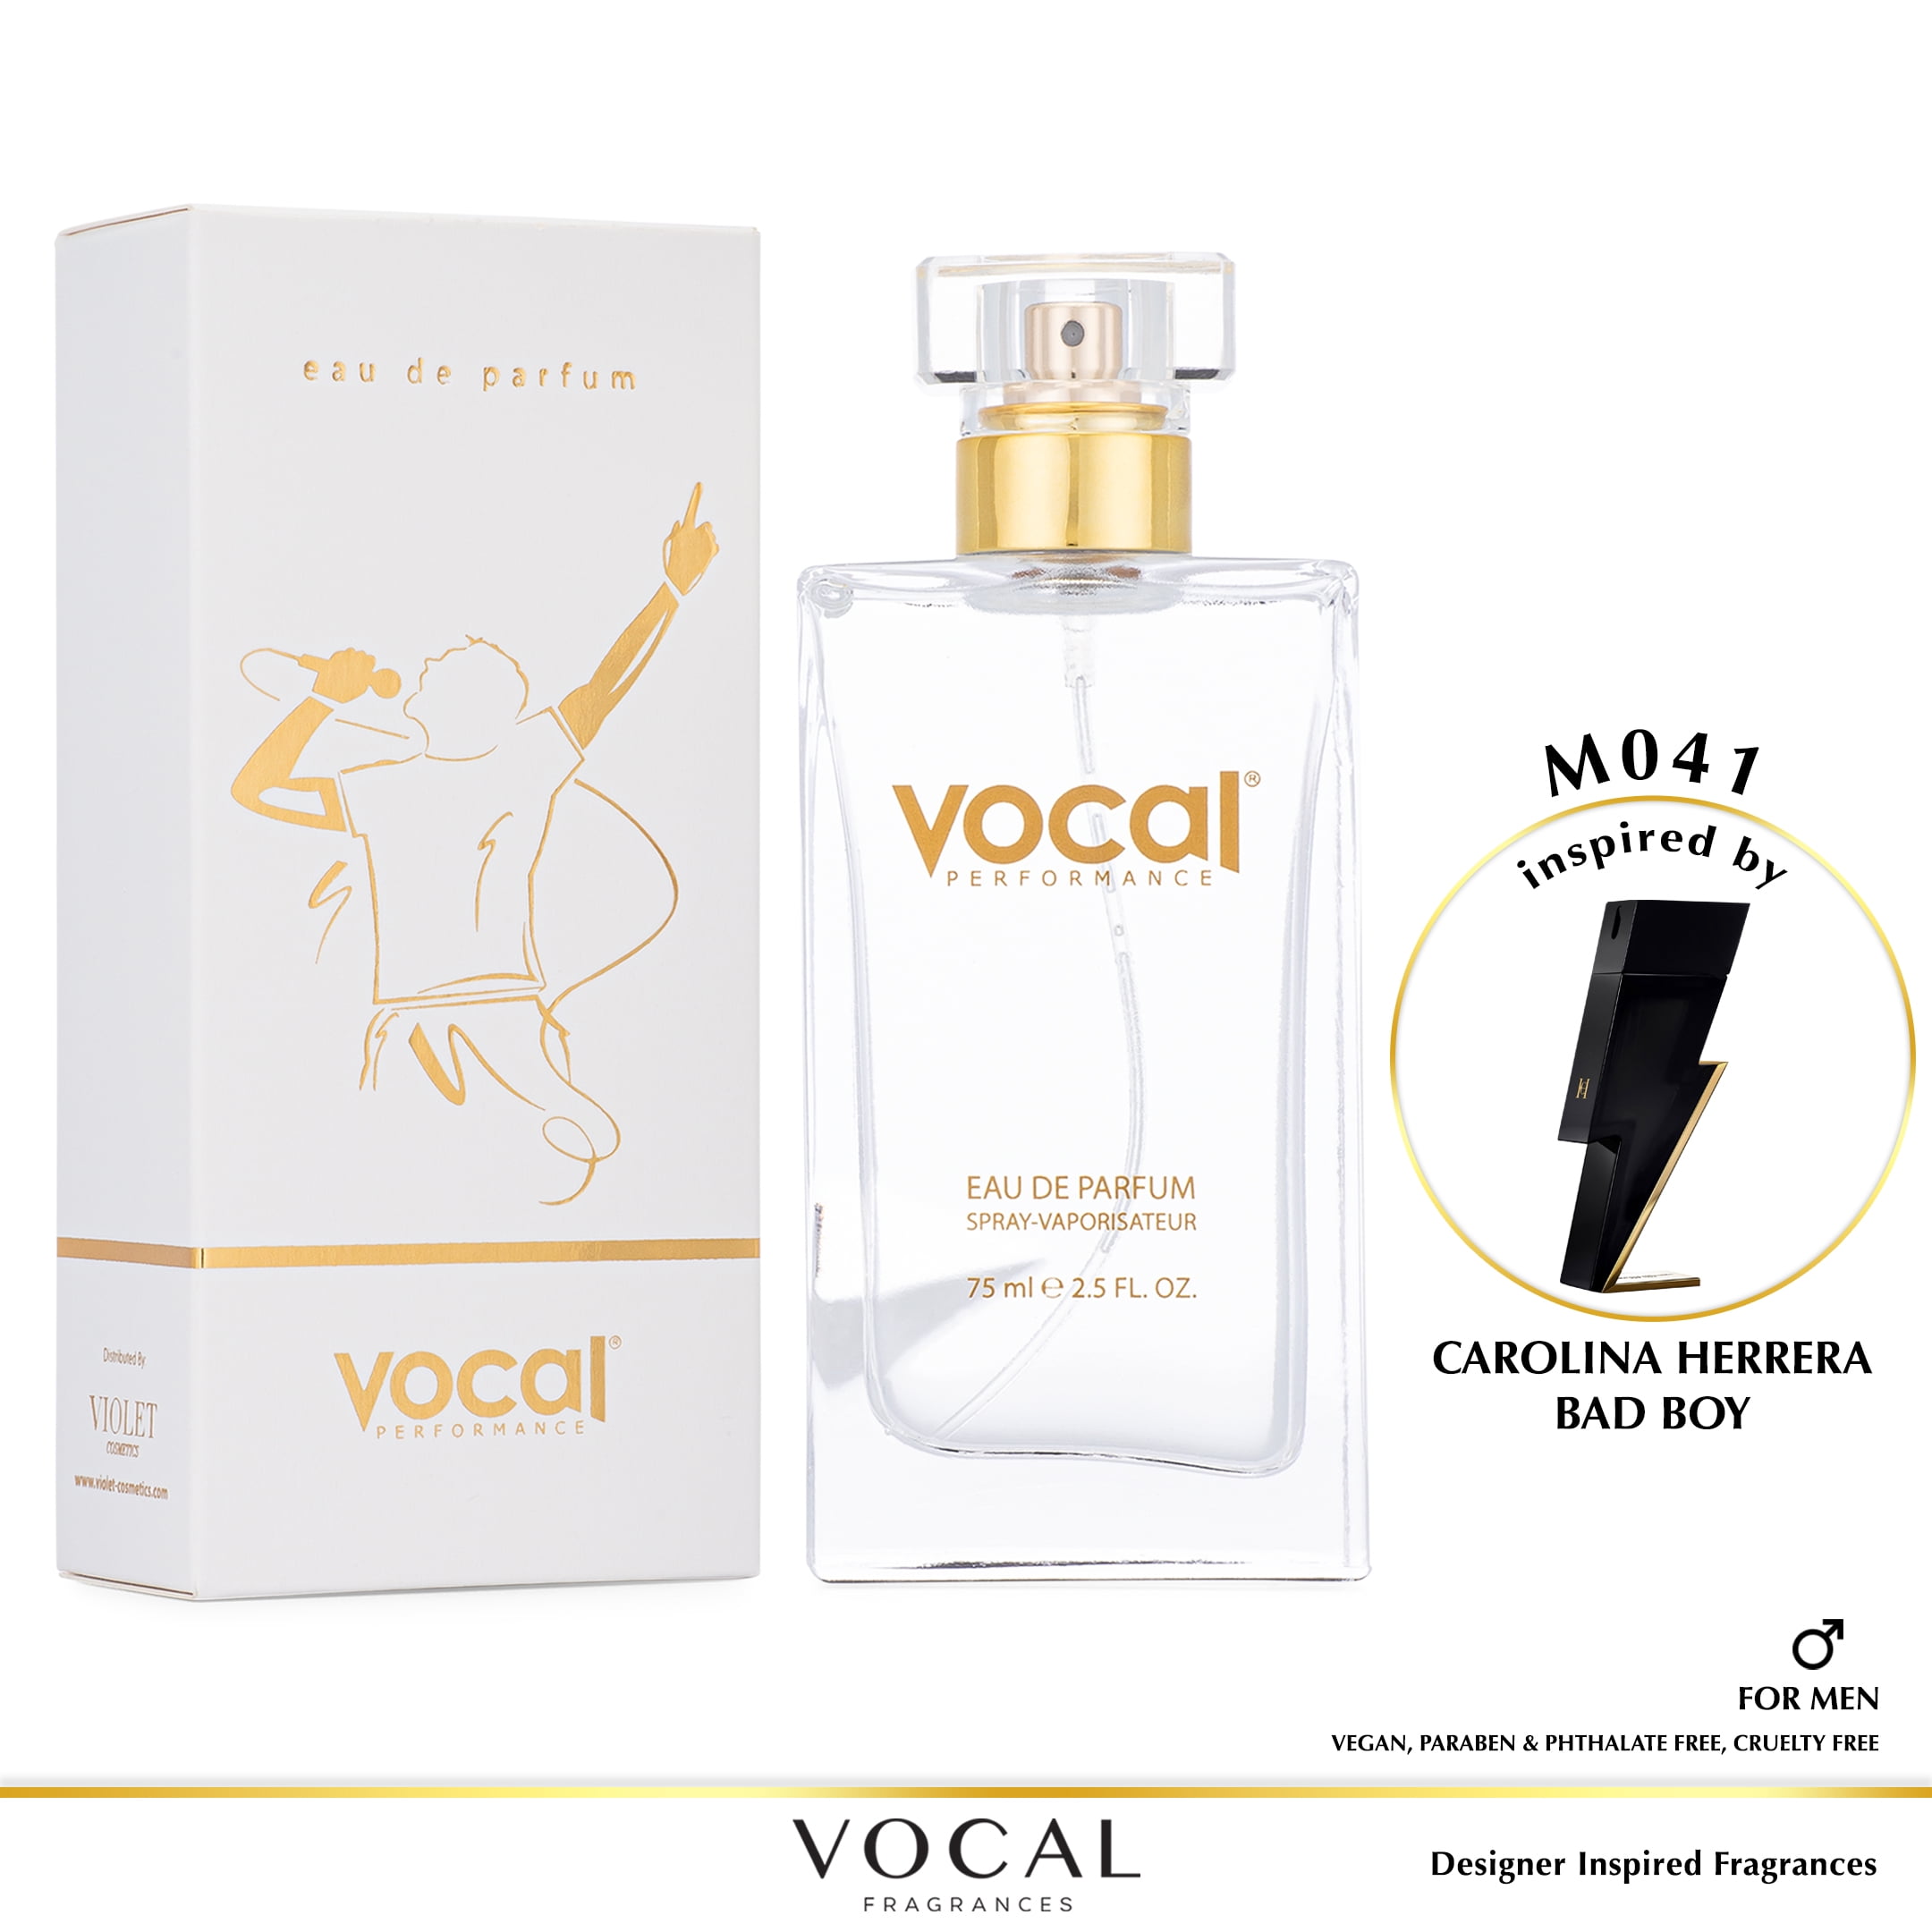 Vocal Fragrance Inspired by Carolina Herrera Bad Boy Eau de Parfum For Men  2.5 FL. OZ. 75 ml. Vegan, Paraben & Phthalate Free Never Tested on Animals